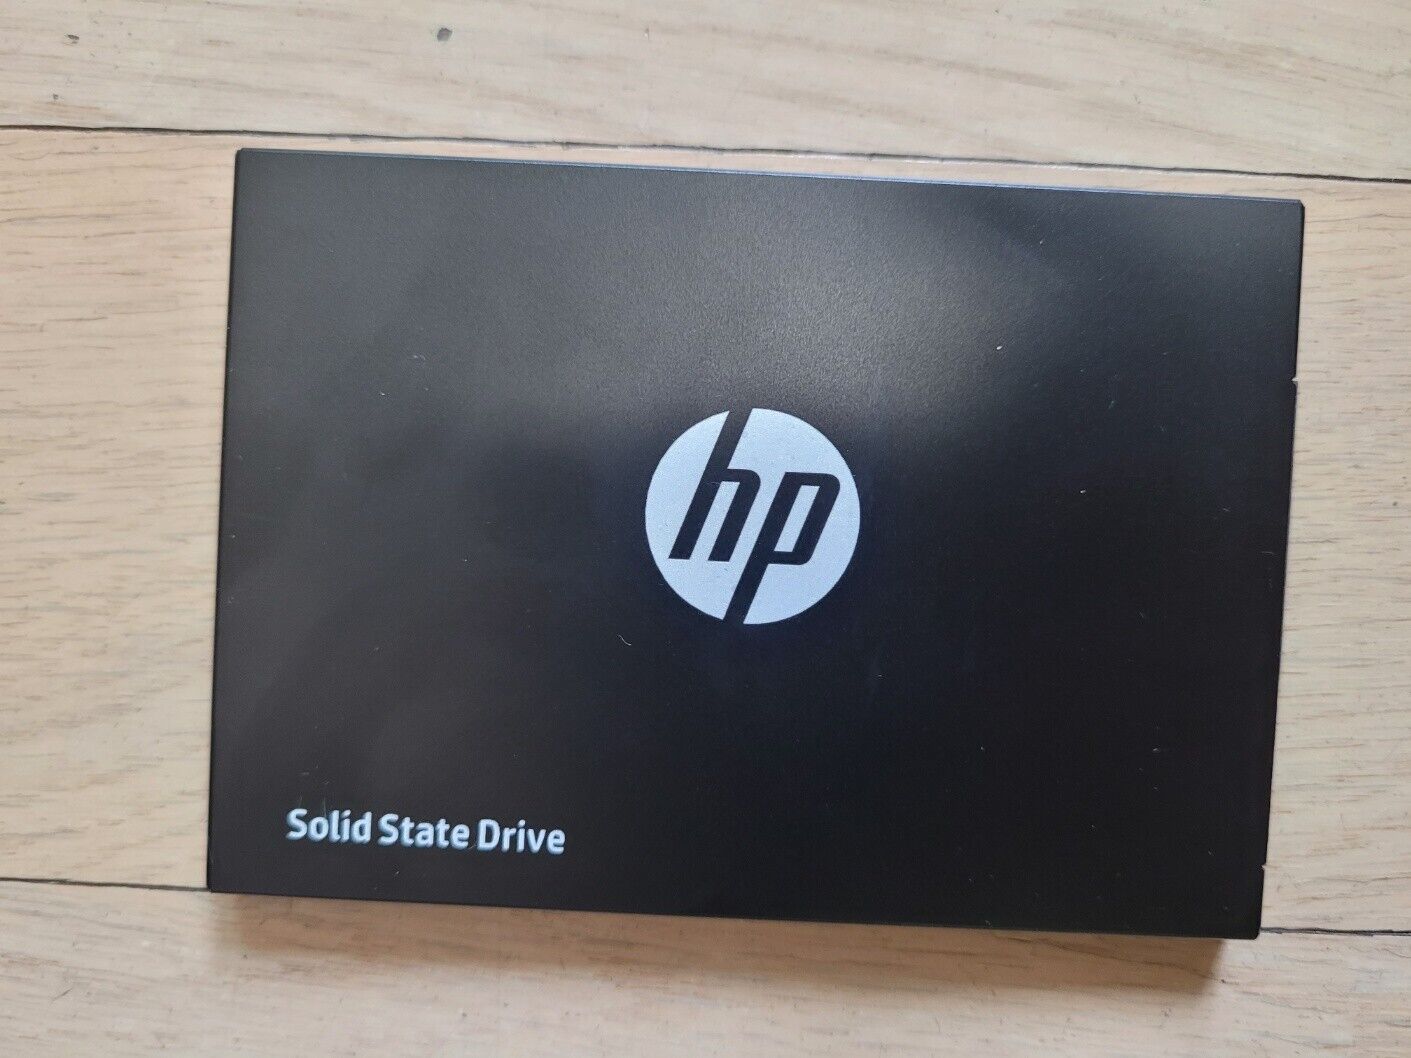 HP SSD S700 2.5 Inch 500GB SATA III Solid State Drive (2DP99AA)